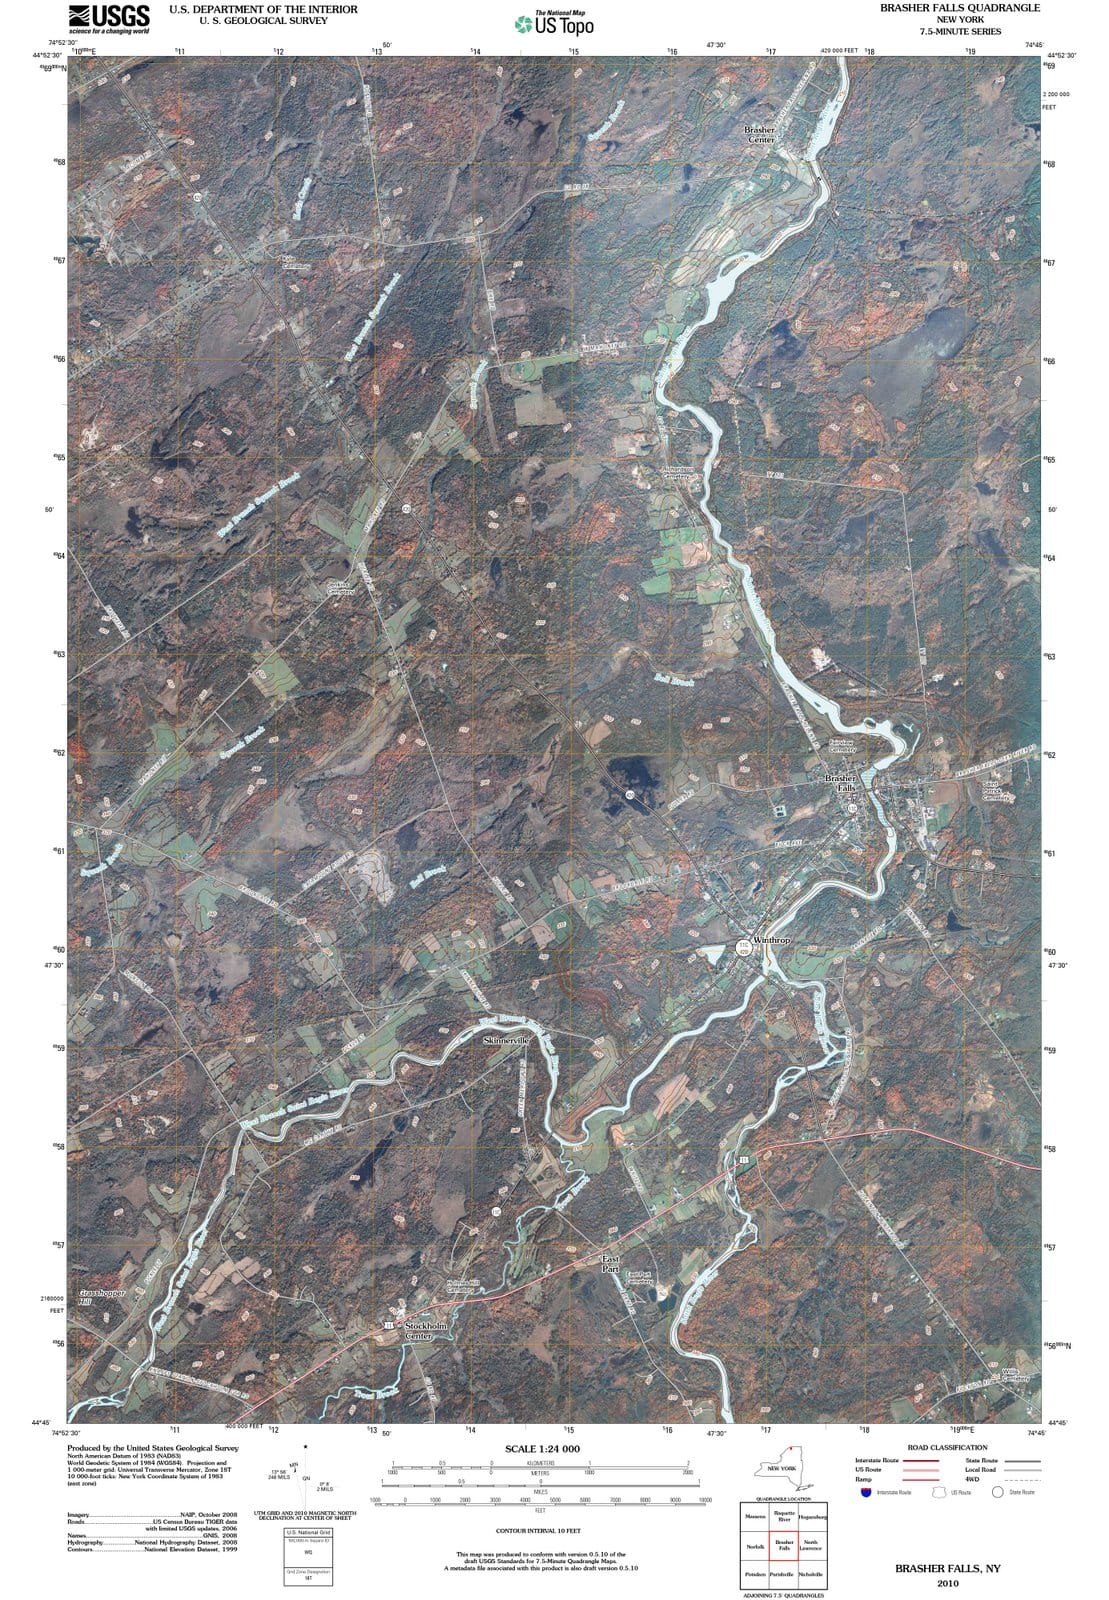 2010 Brasher Falls, NY - New York - USGS Topographic Map